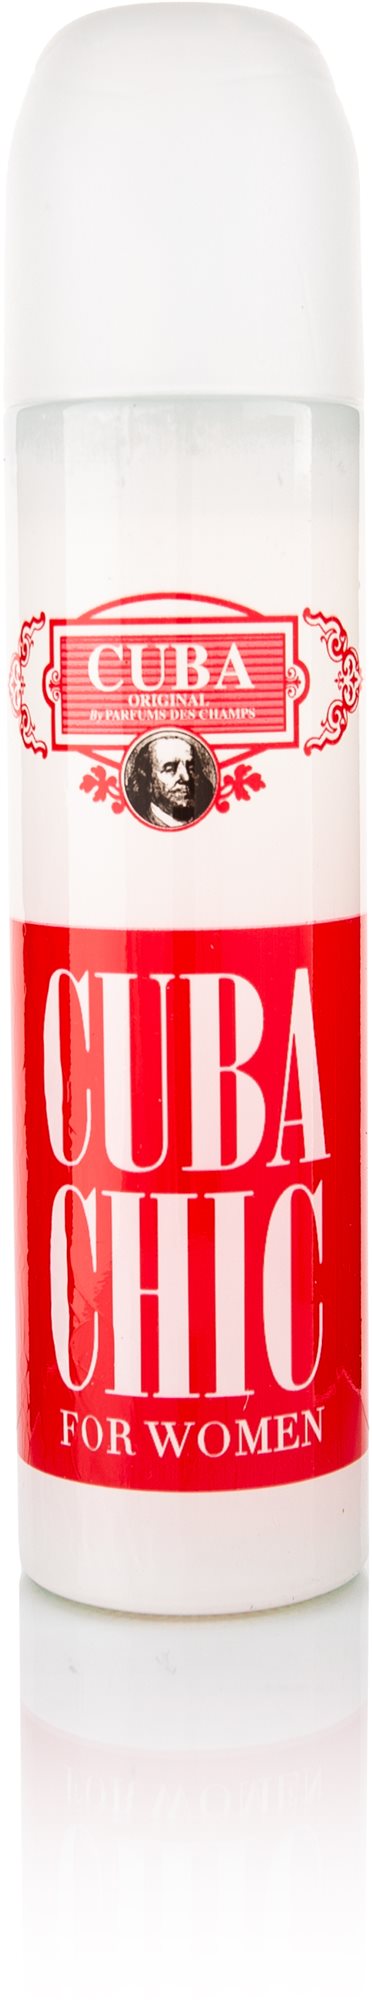 Parfüm CUBA Chic EdP 100 ml